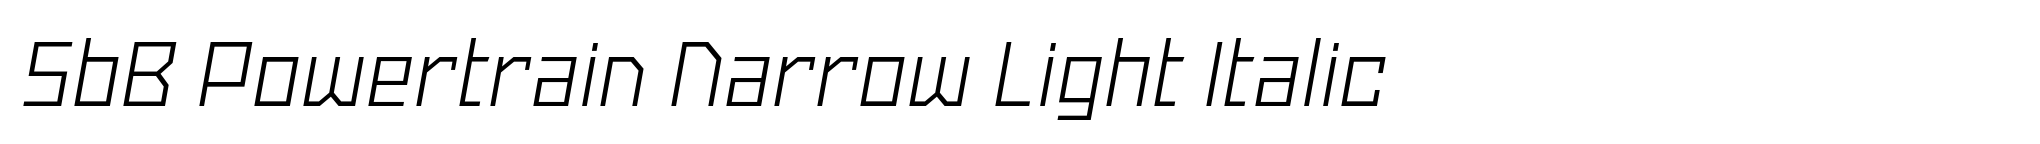 SbB Powertrain Narrow Light Italic image